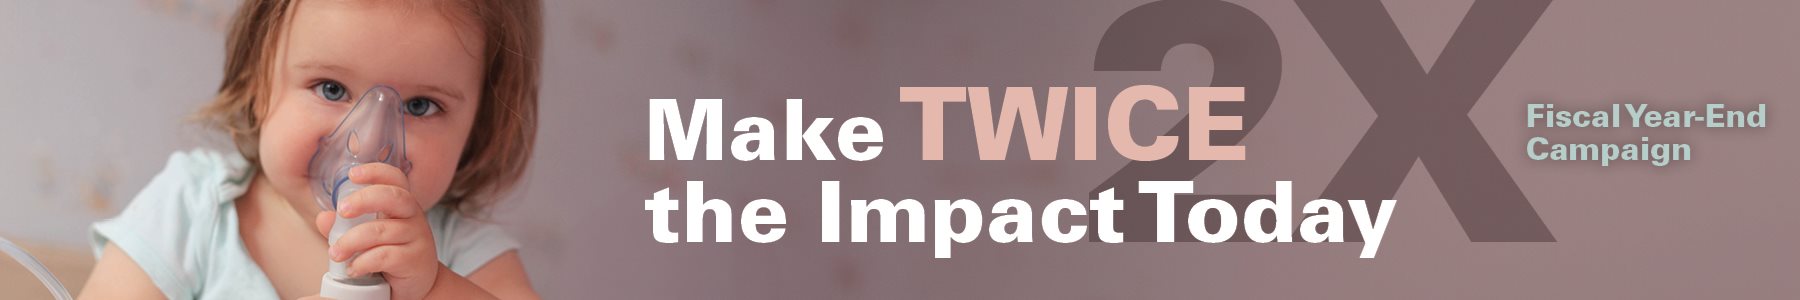 Make Twice the Impact Homepage Image